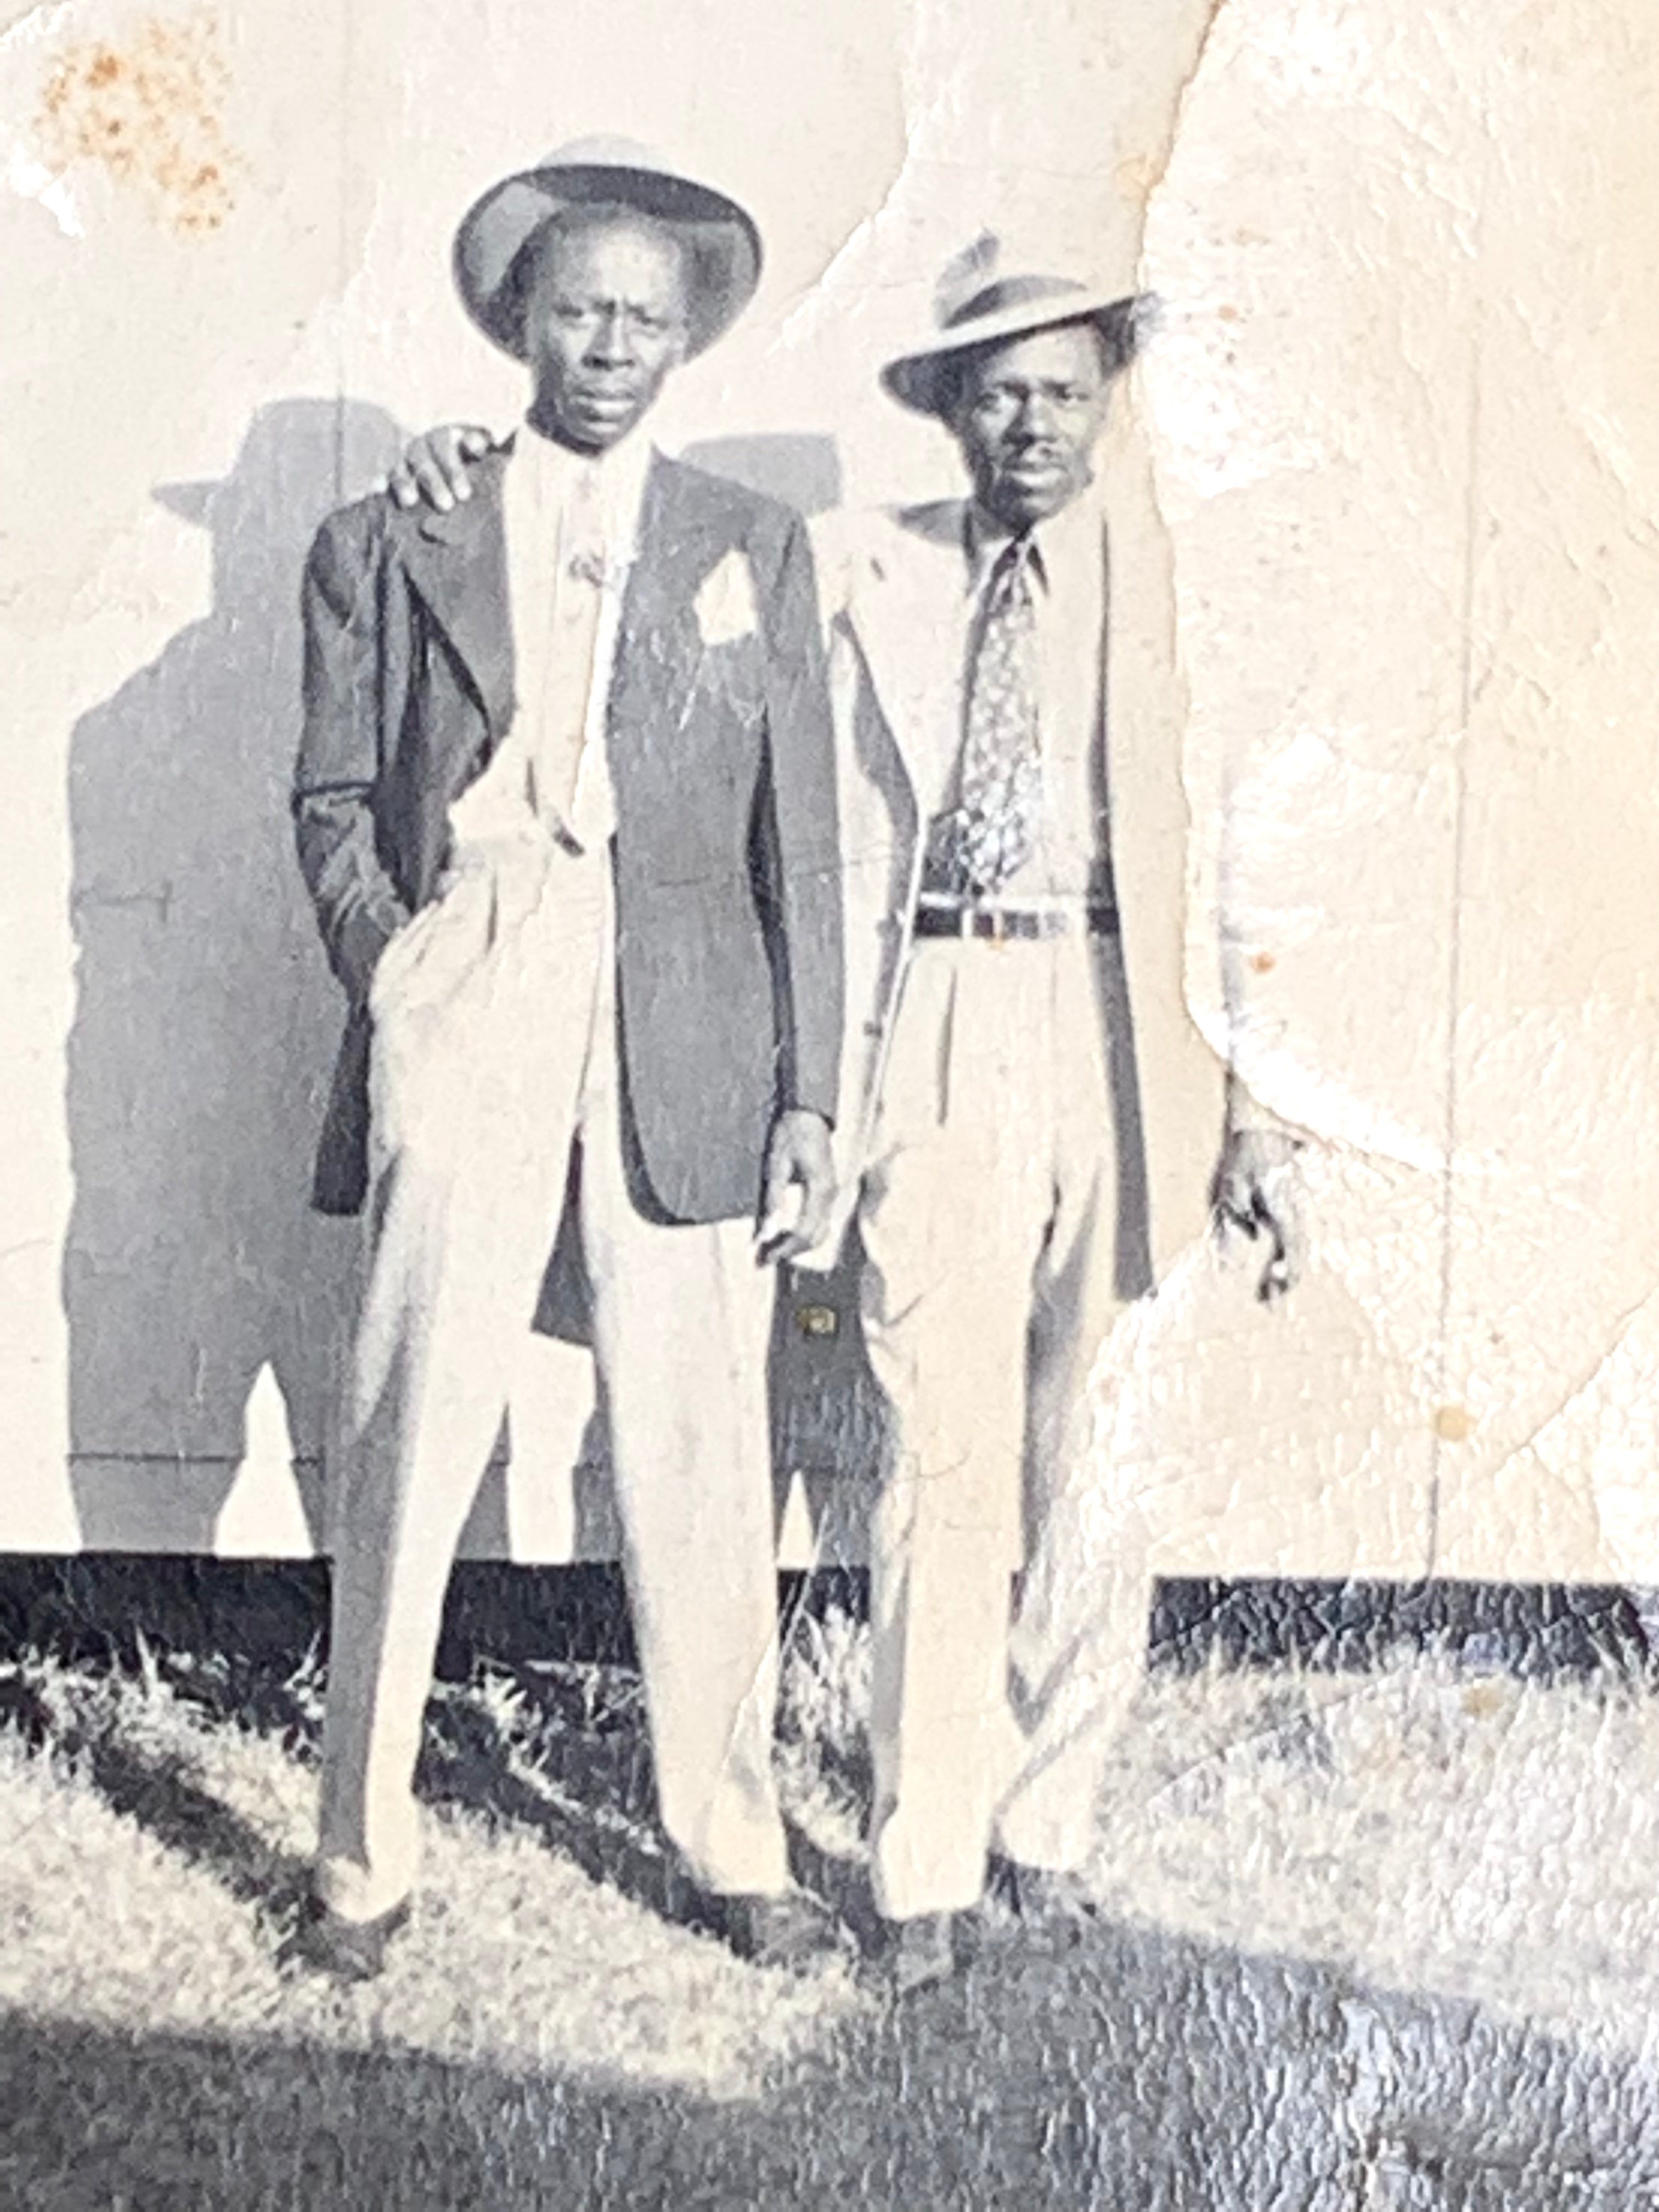 Black & White Photograph; Portrait of Two African American / Black Men